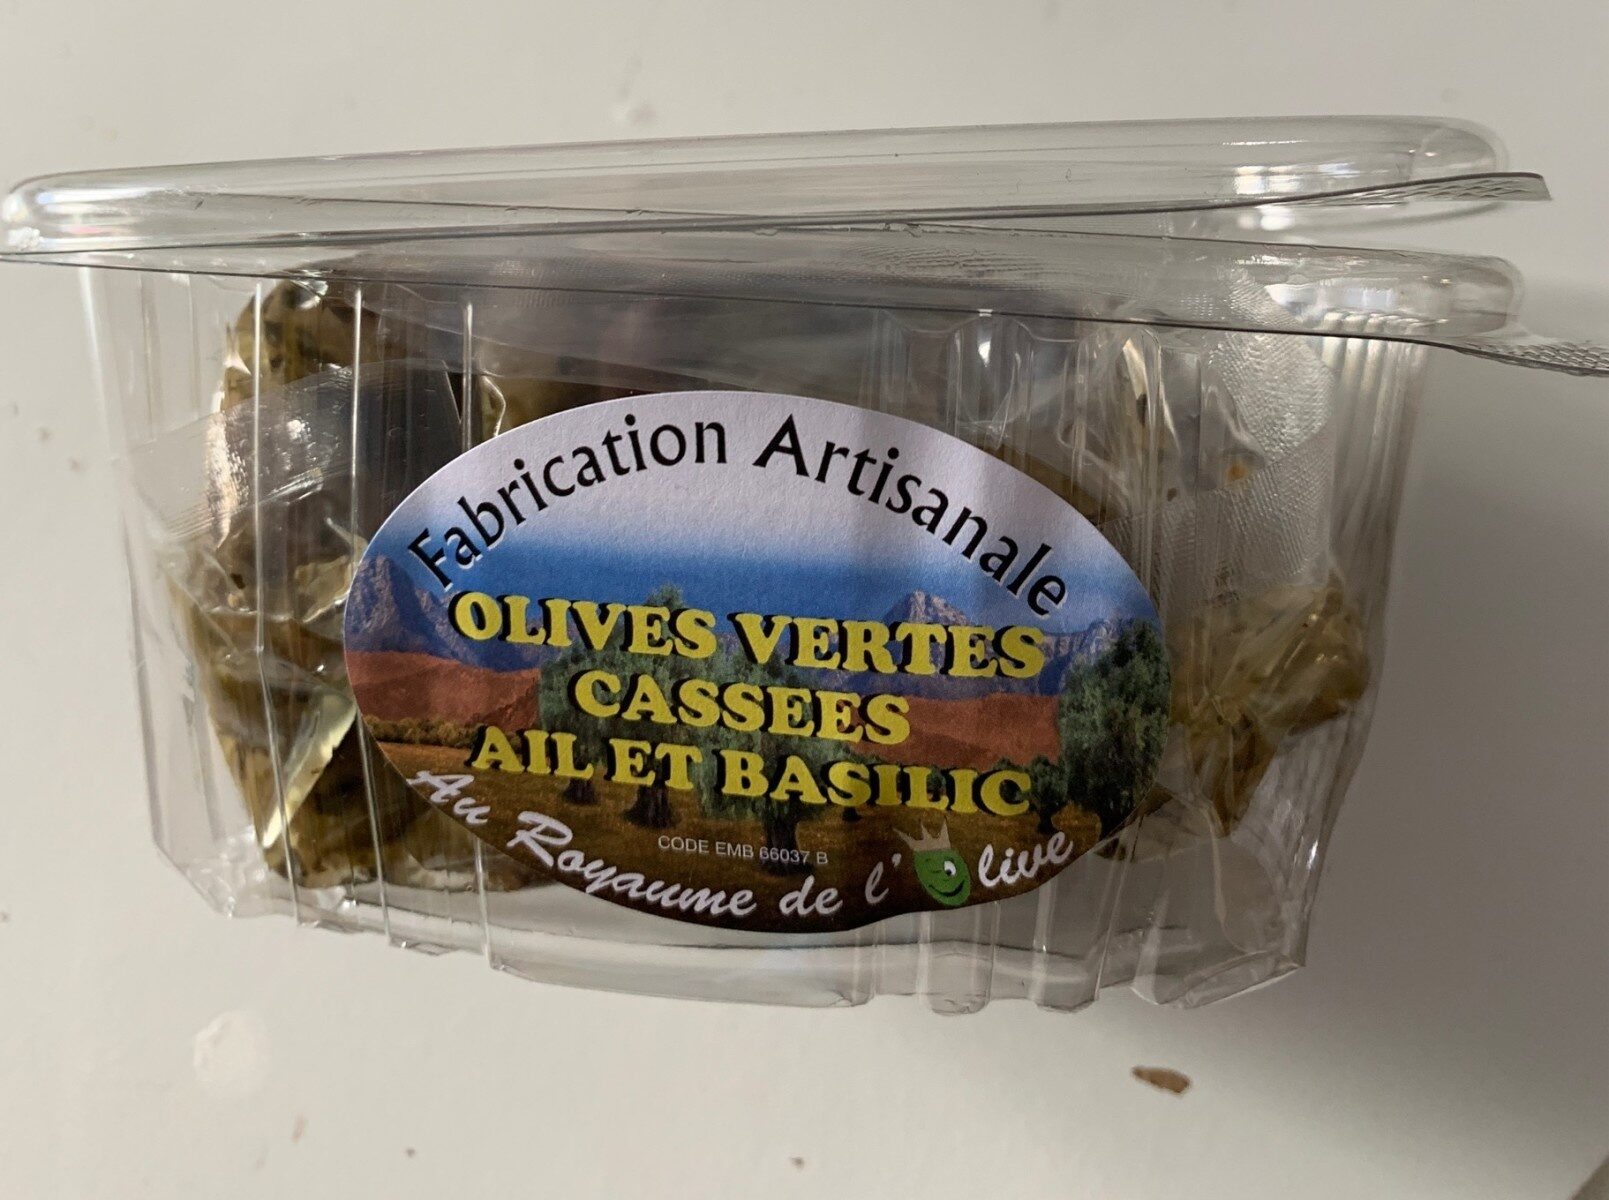 Olives vertes cassees ail et basilic - Producto - fr